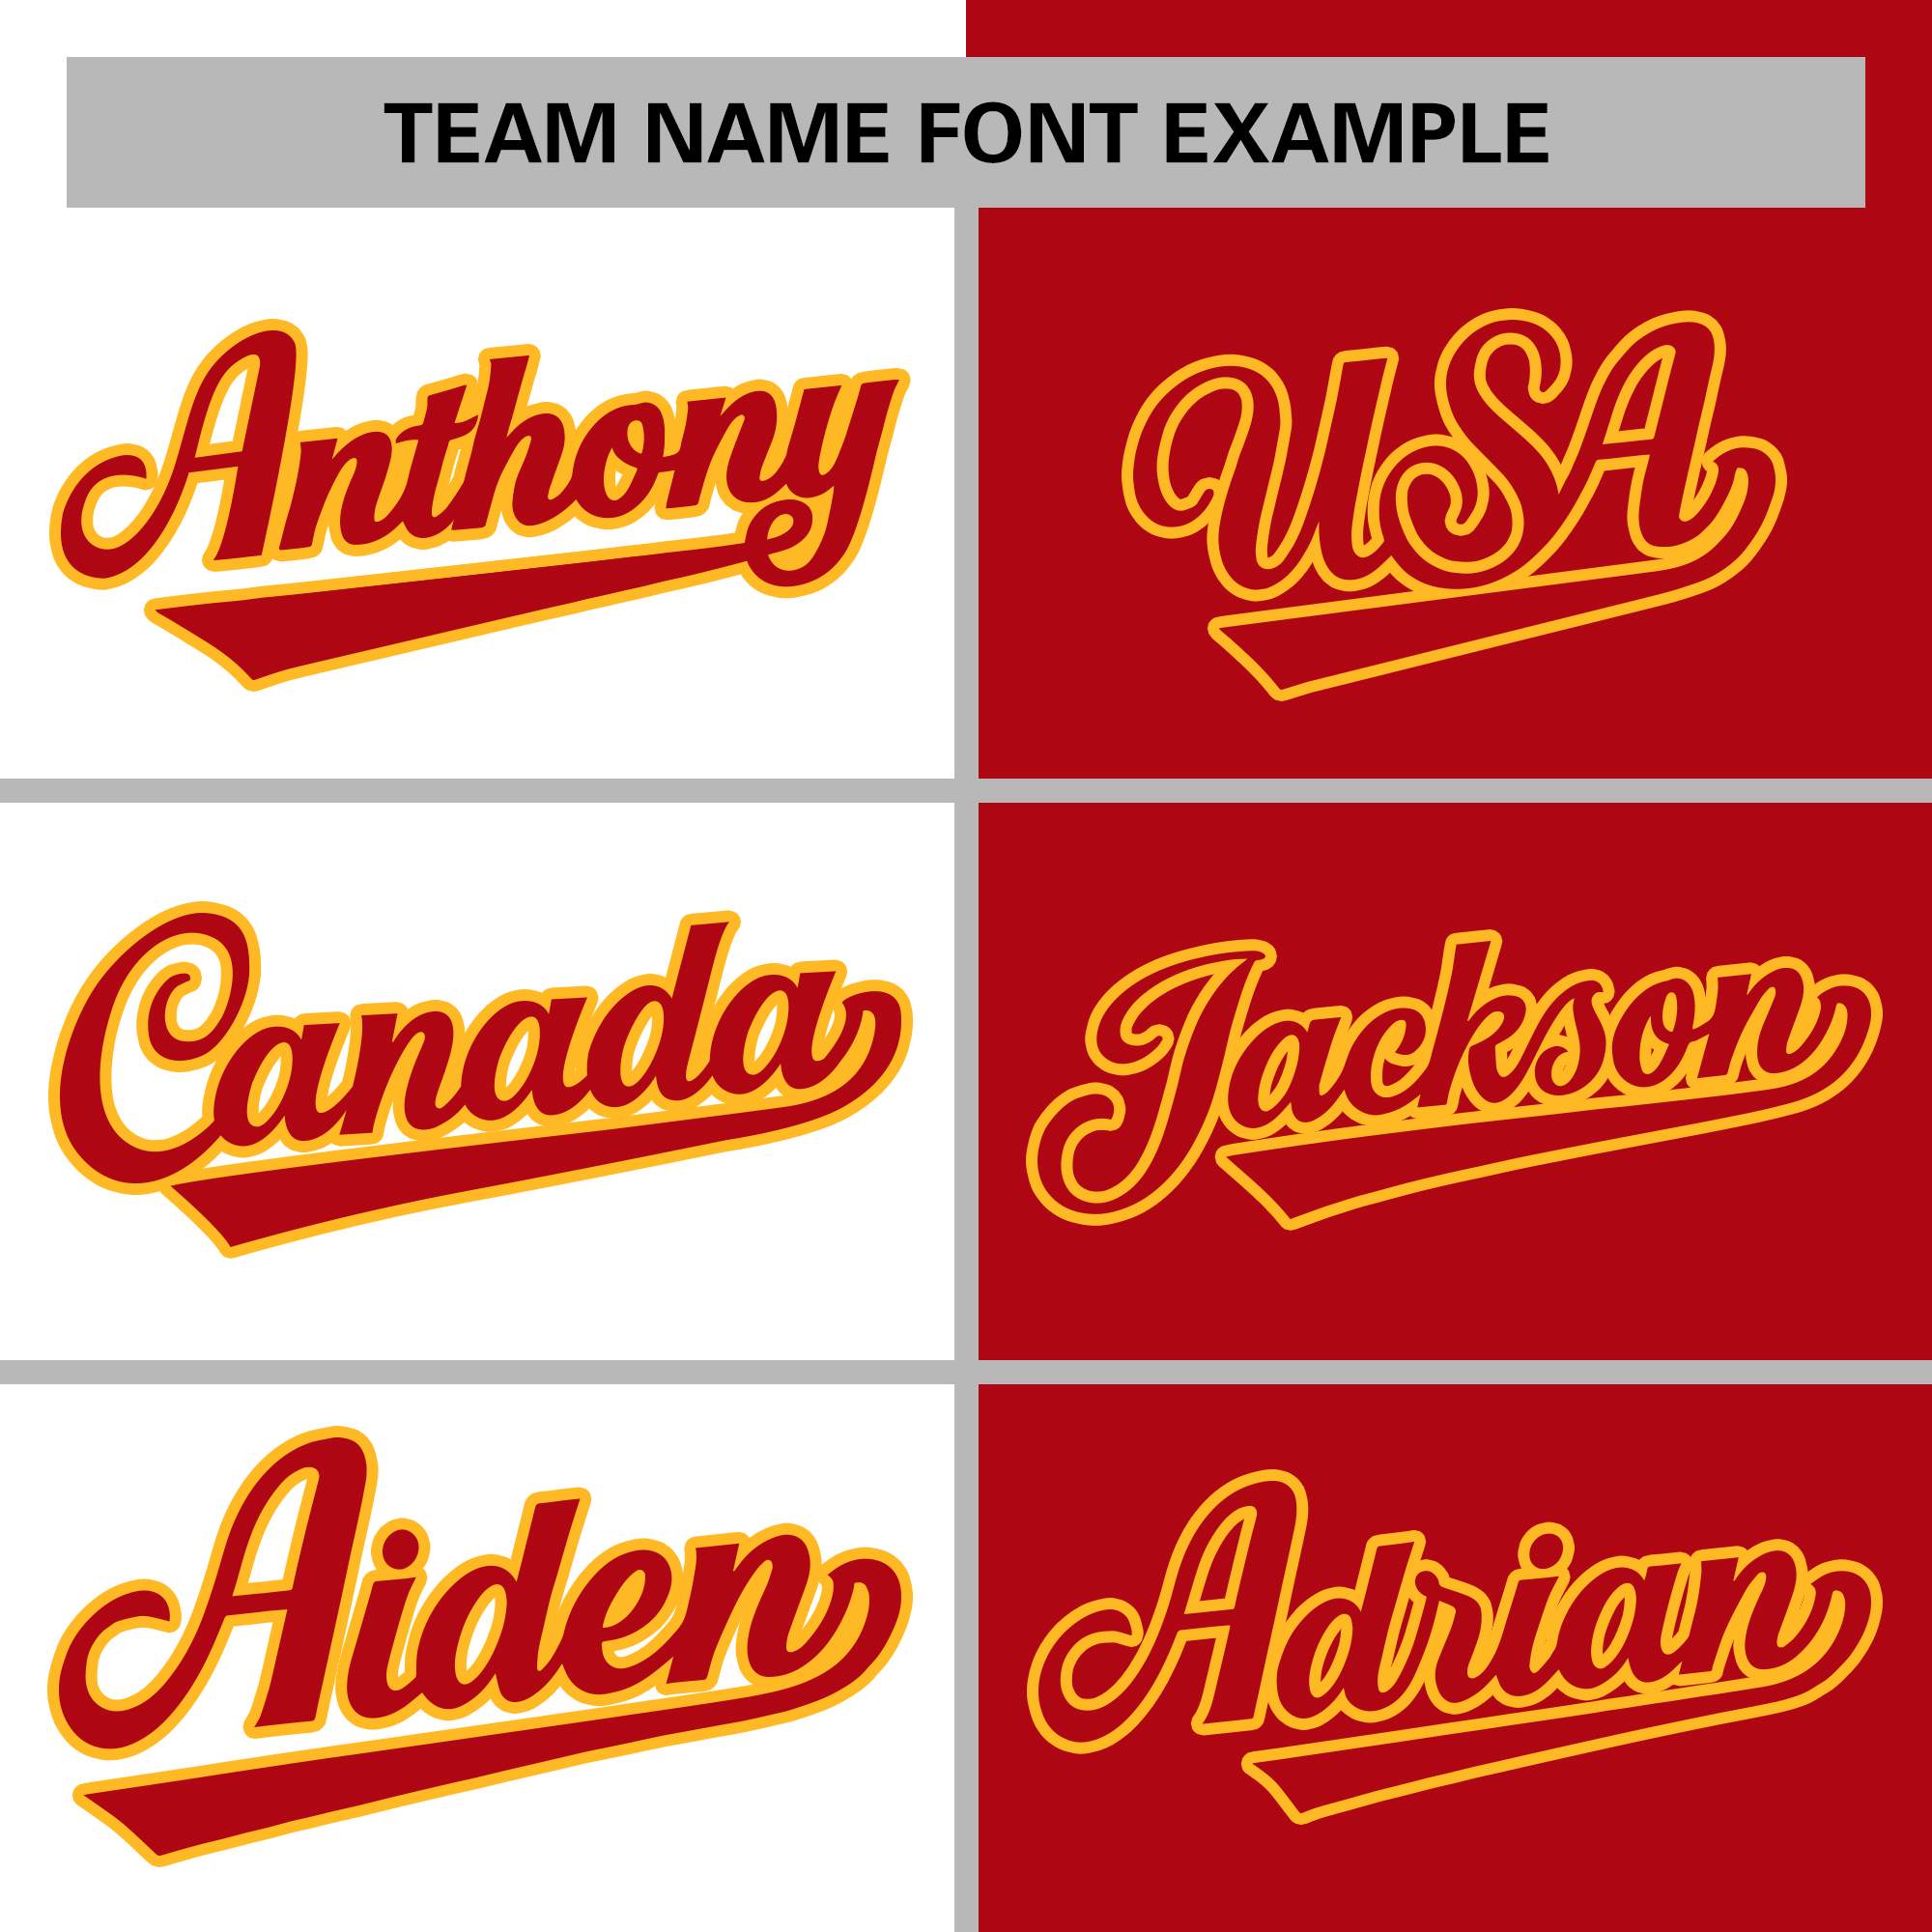 custom letterman full-snap split fahion jacket team name font example